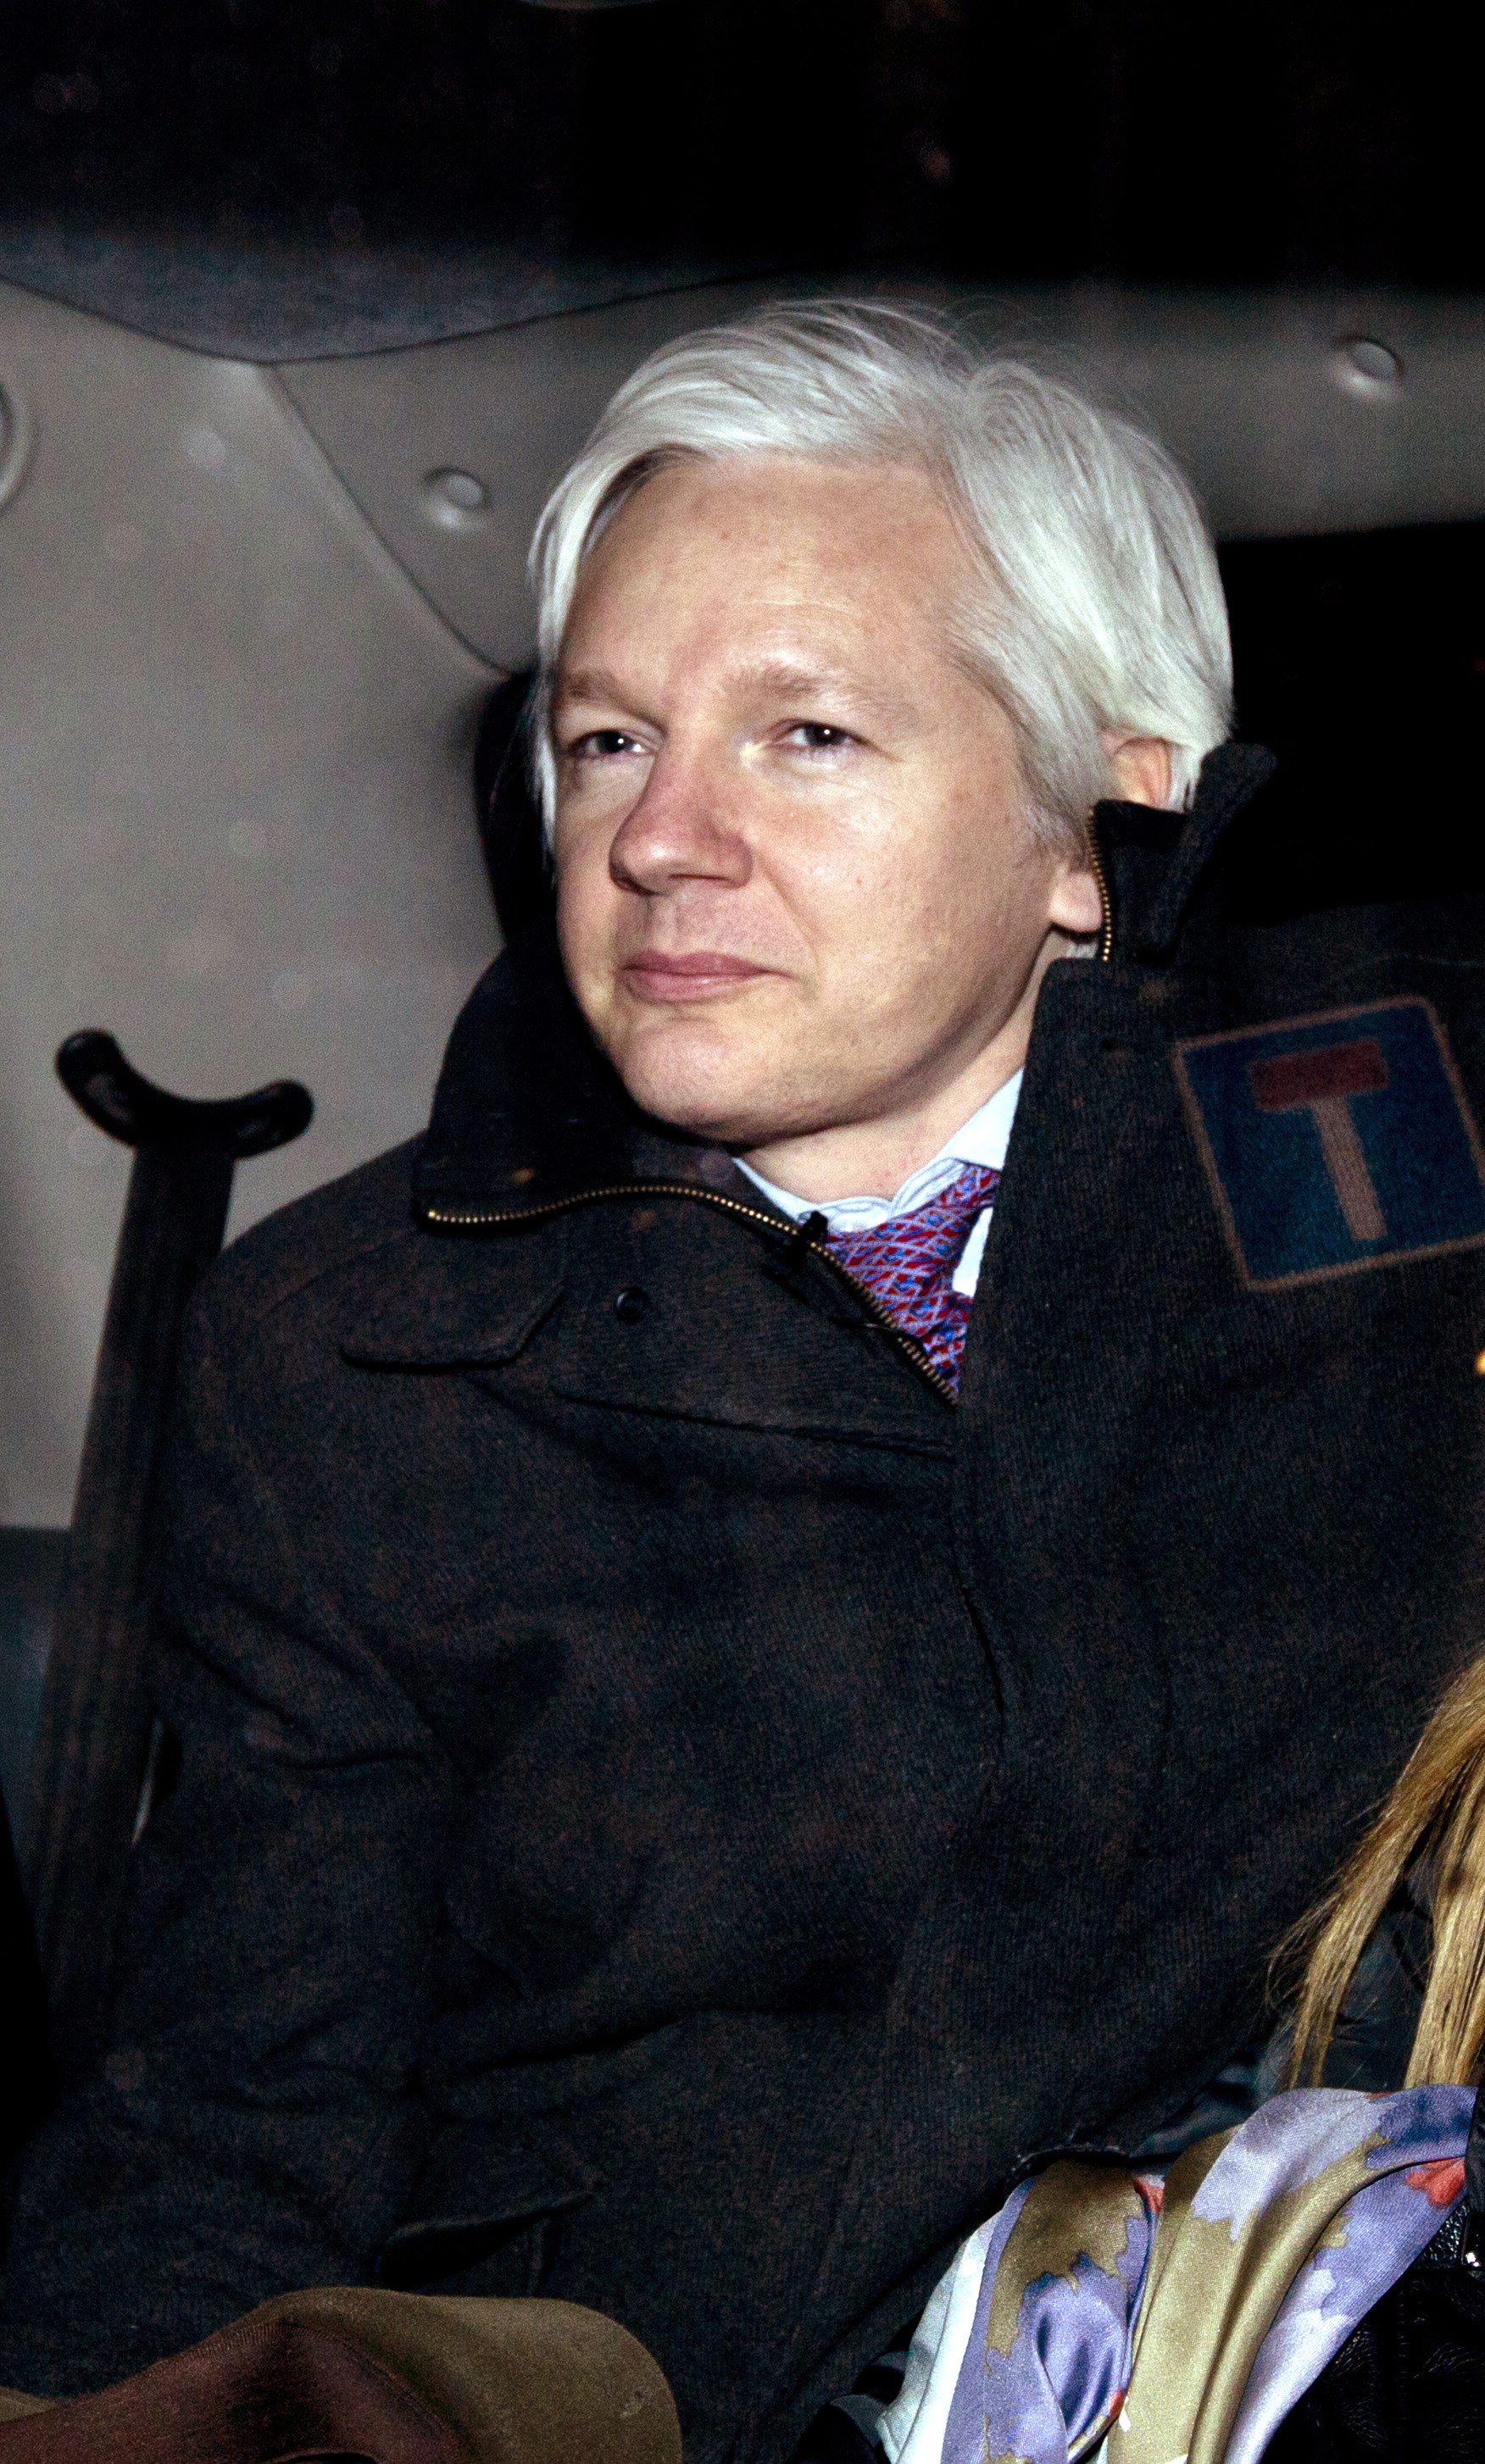 Ryssland, Sverige, Wikileaks, Teveprogram, USA, Julian Assange, Talkshow, Internet